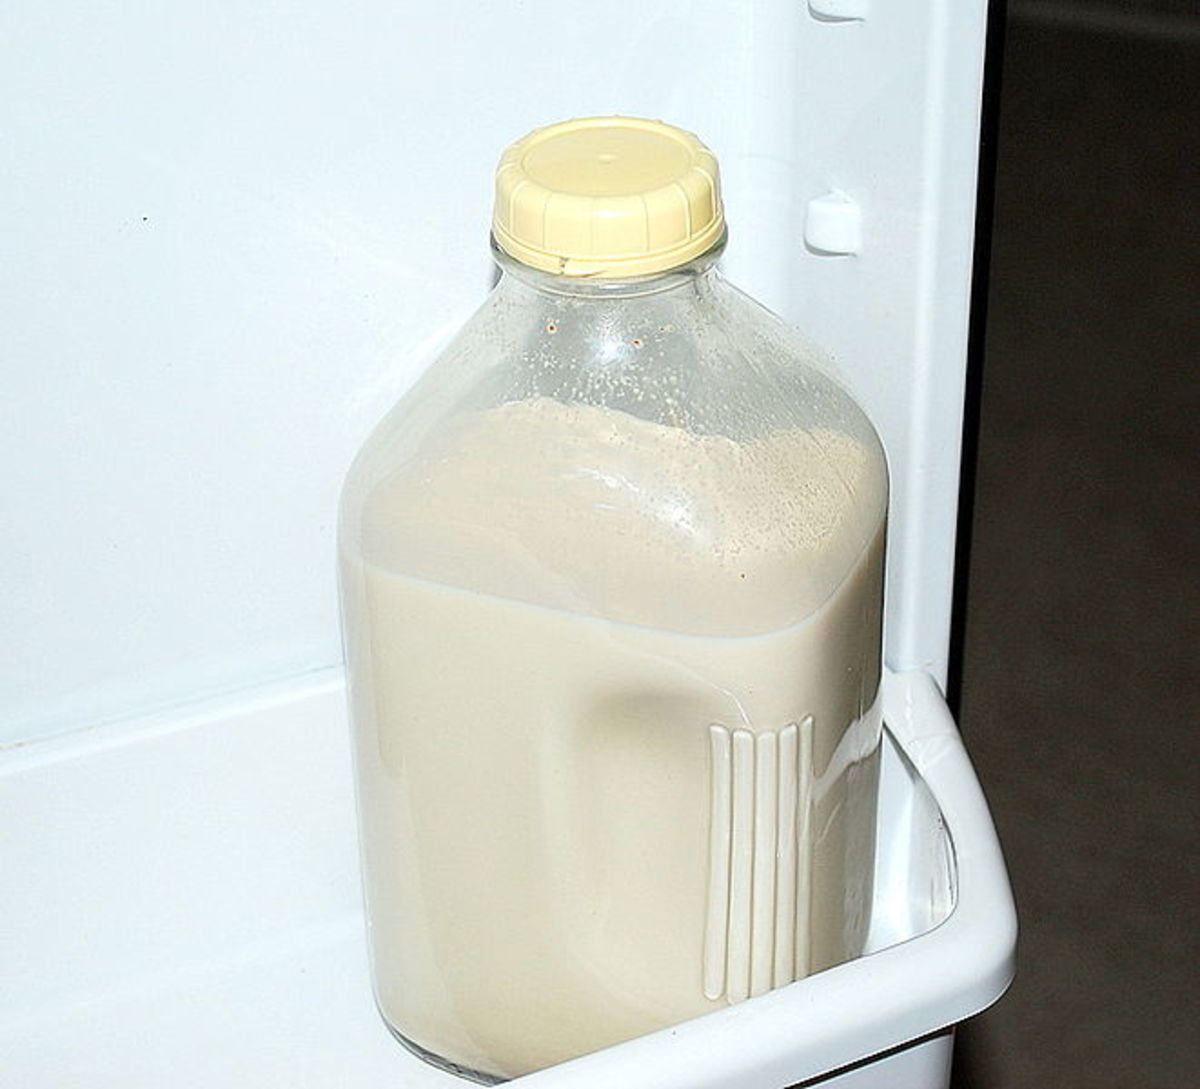 A jug of almond milk in the fridge.